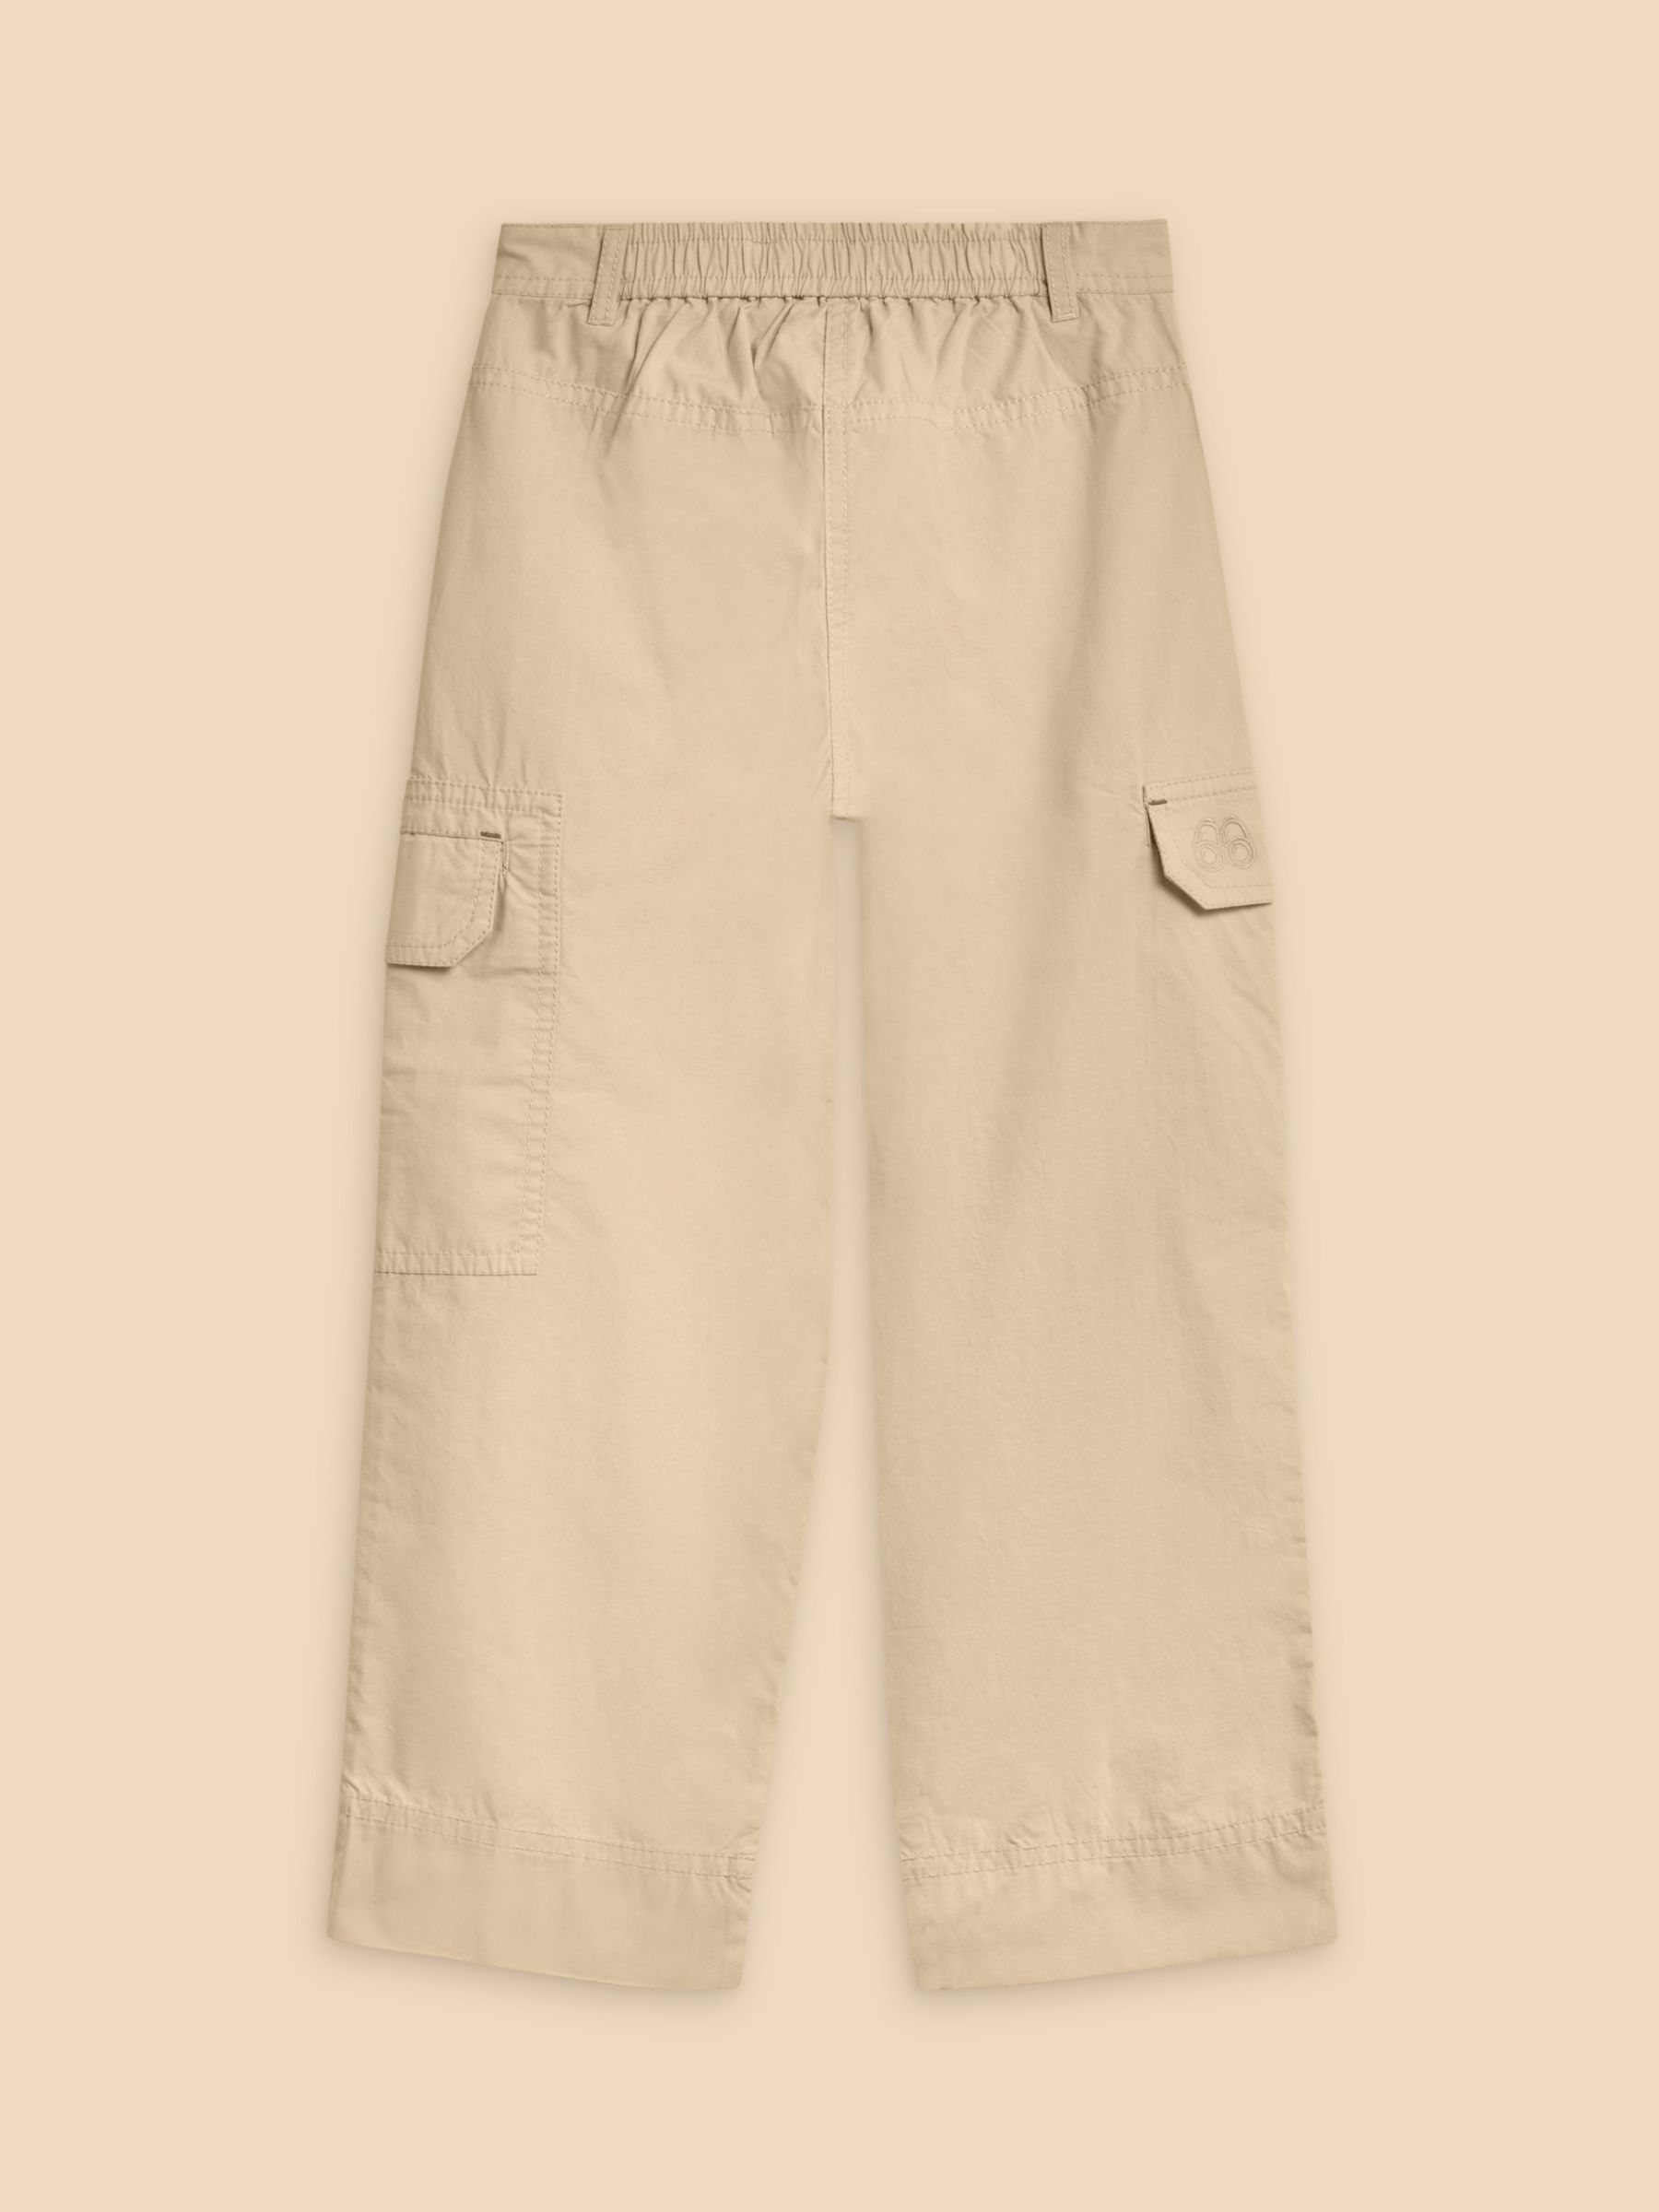 White Stuff Kids' Colette Trousers, Beige, 3-4 years